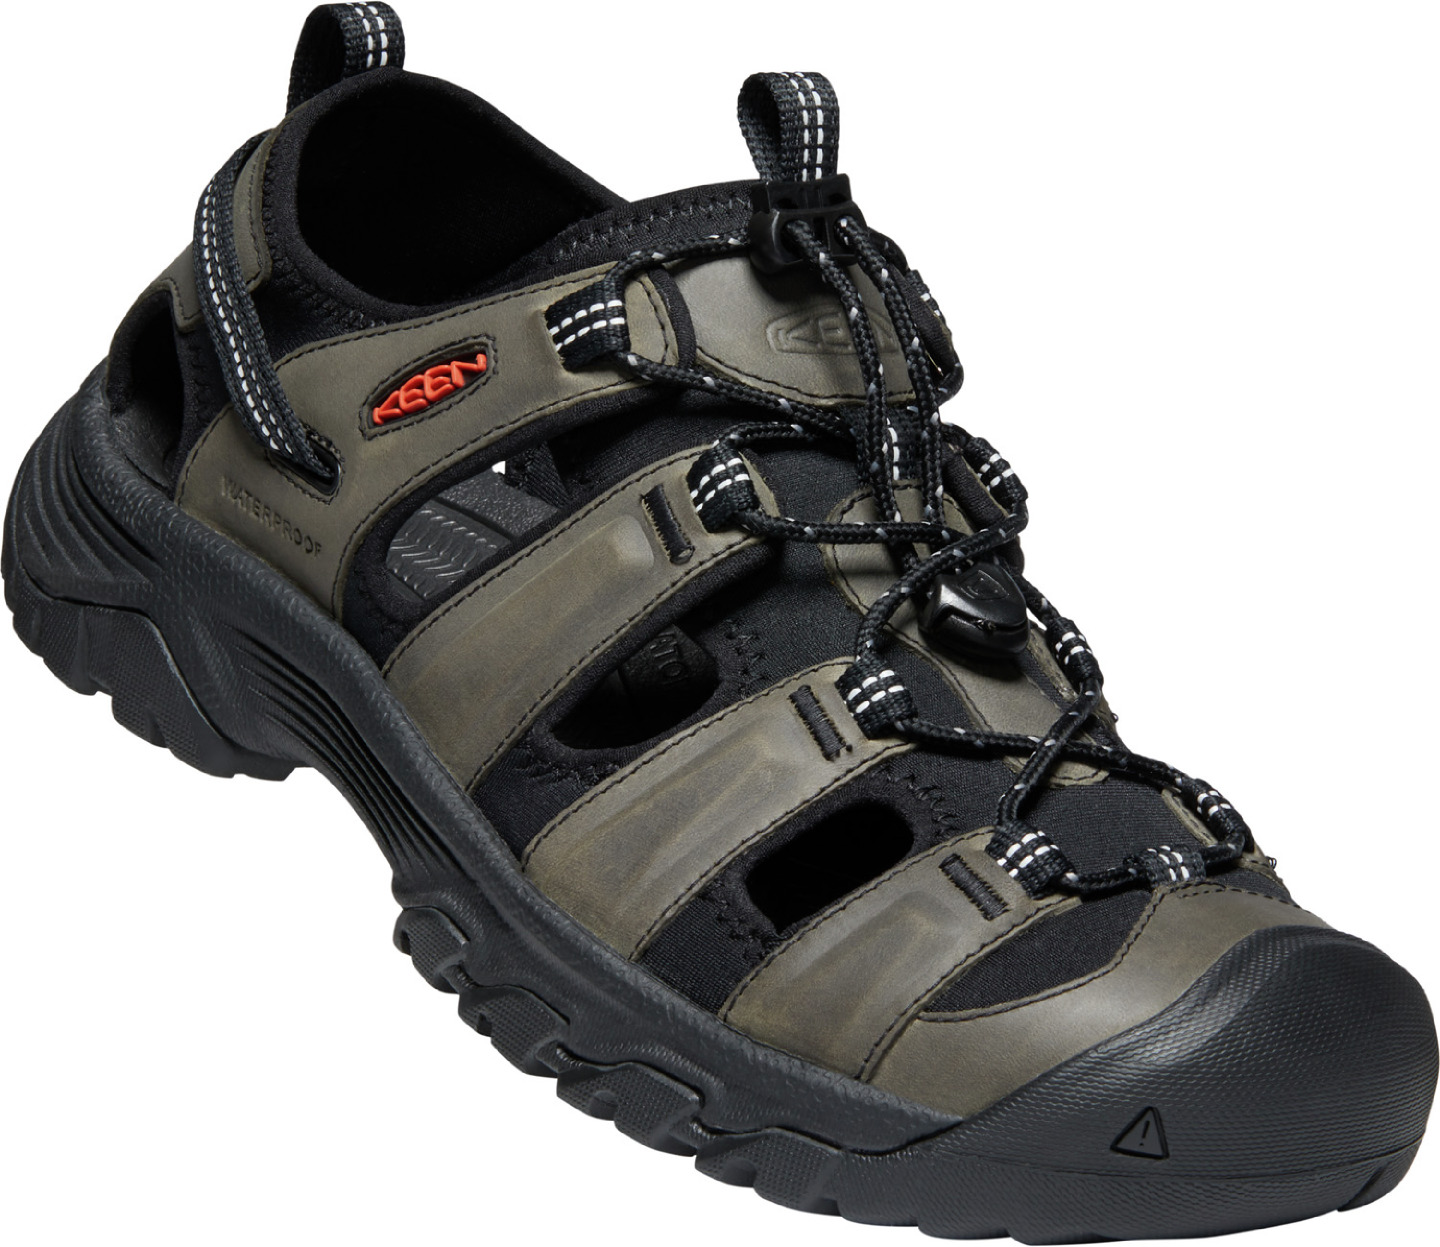 Keen pánské sandály Targhee III Sandal Men - Grey/Black Barva: Grey/Black, Velikost: 8 UK (42 EU / 27 cm)